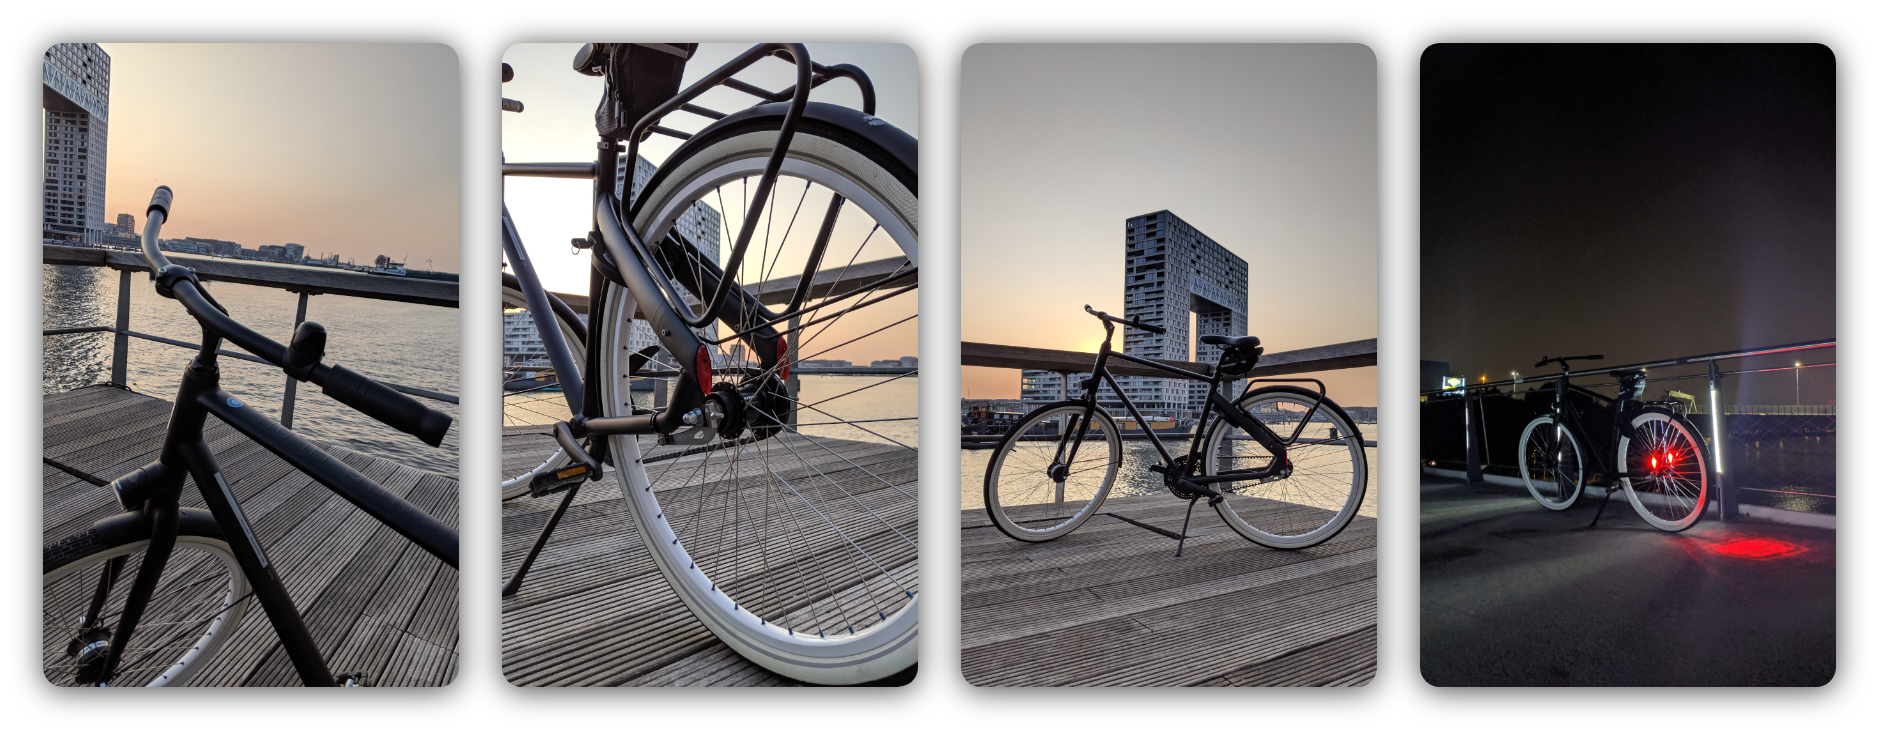 The perfect city bike | Cortina Blau ND2 review | by Matt Szaszko | Medium